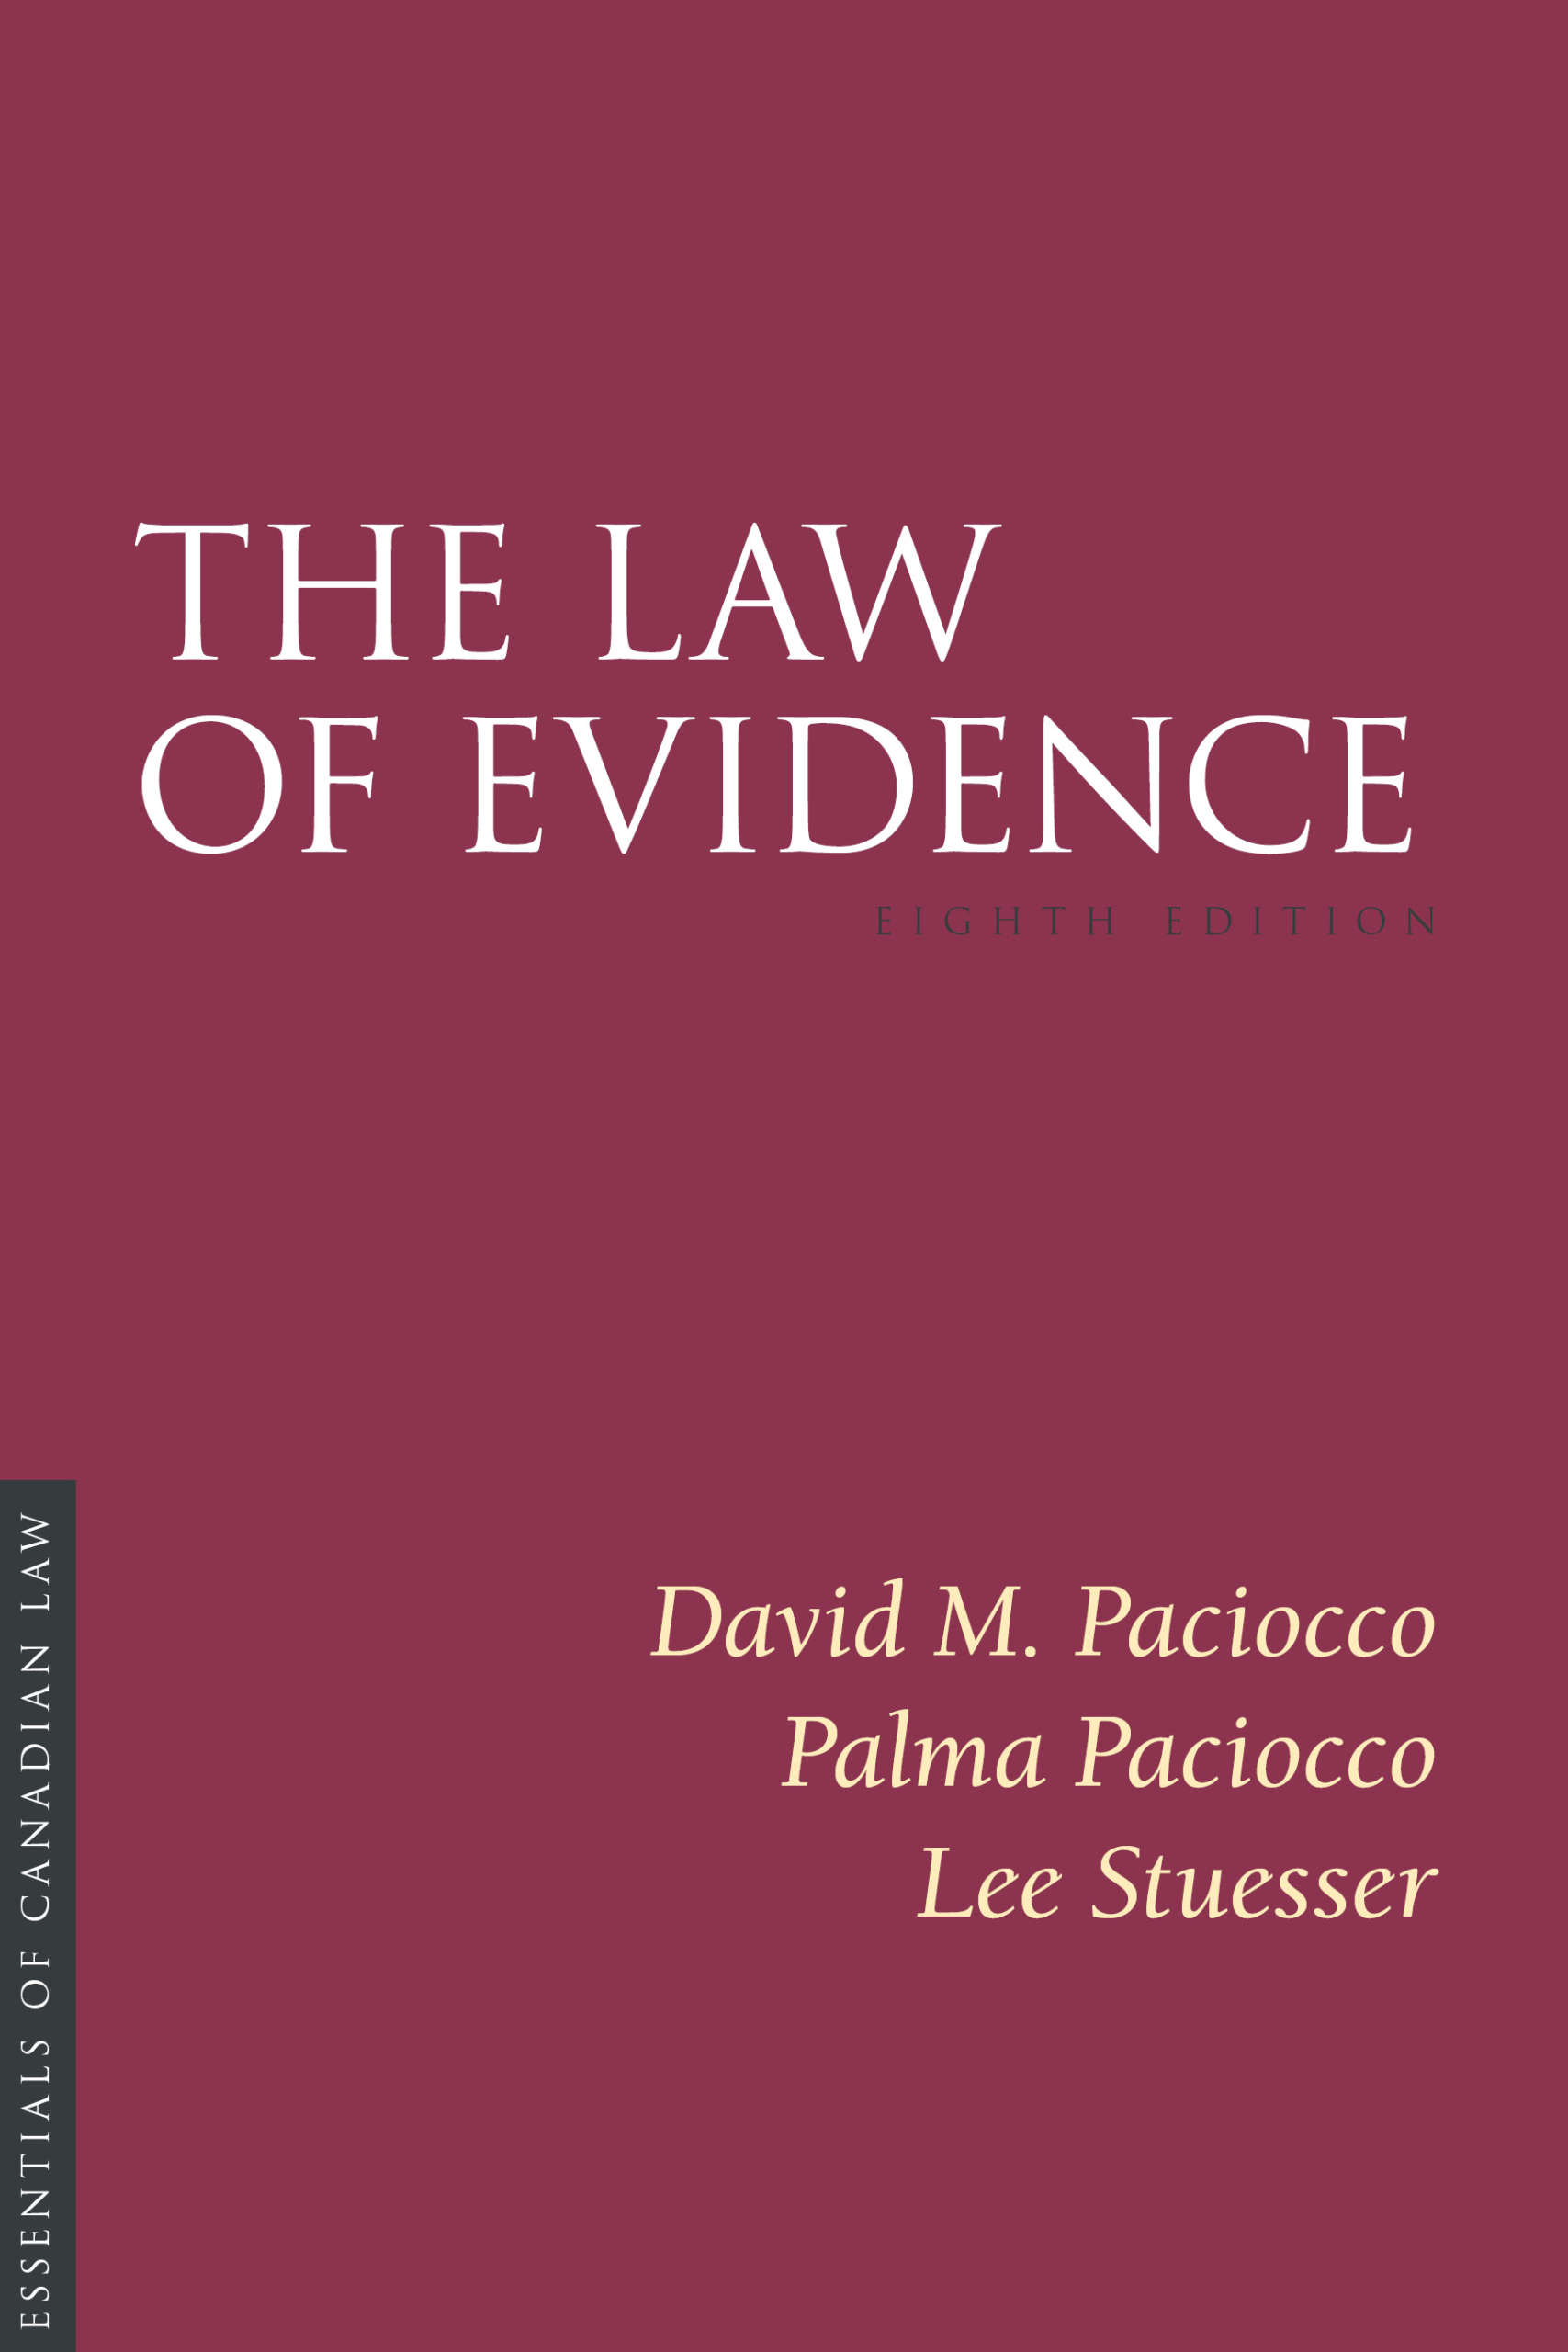 dissertation topics on evidence law